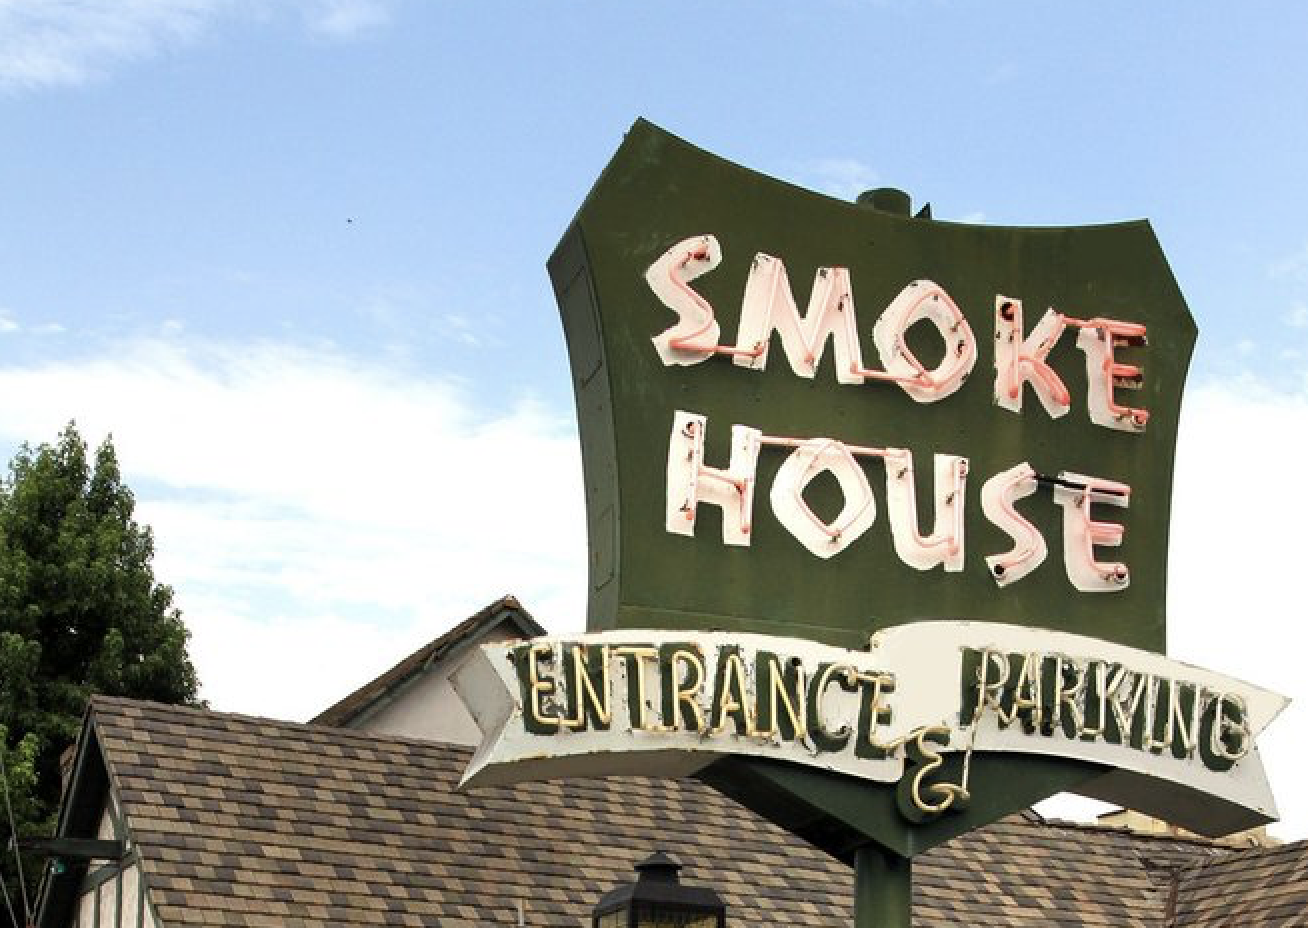 THE SMOKE HOUSE